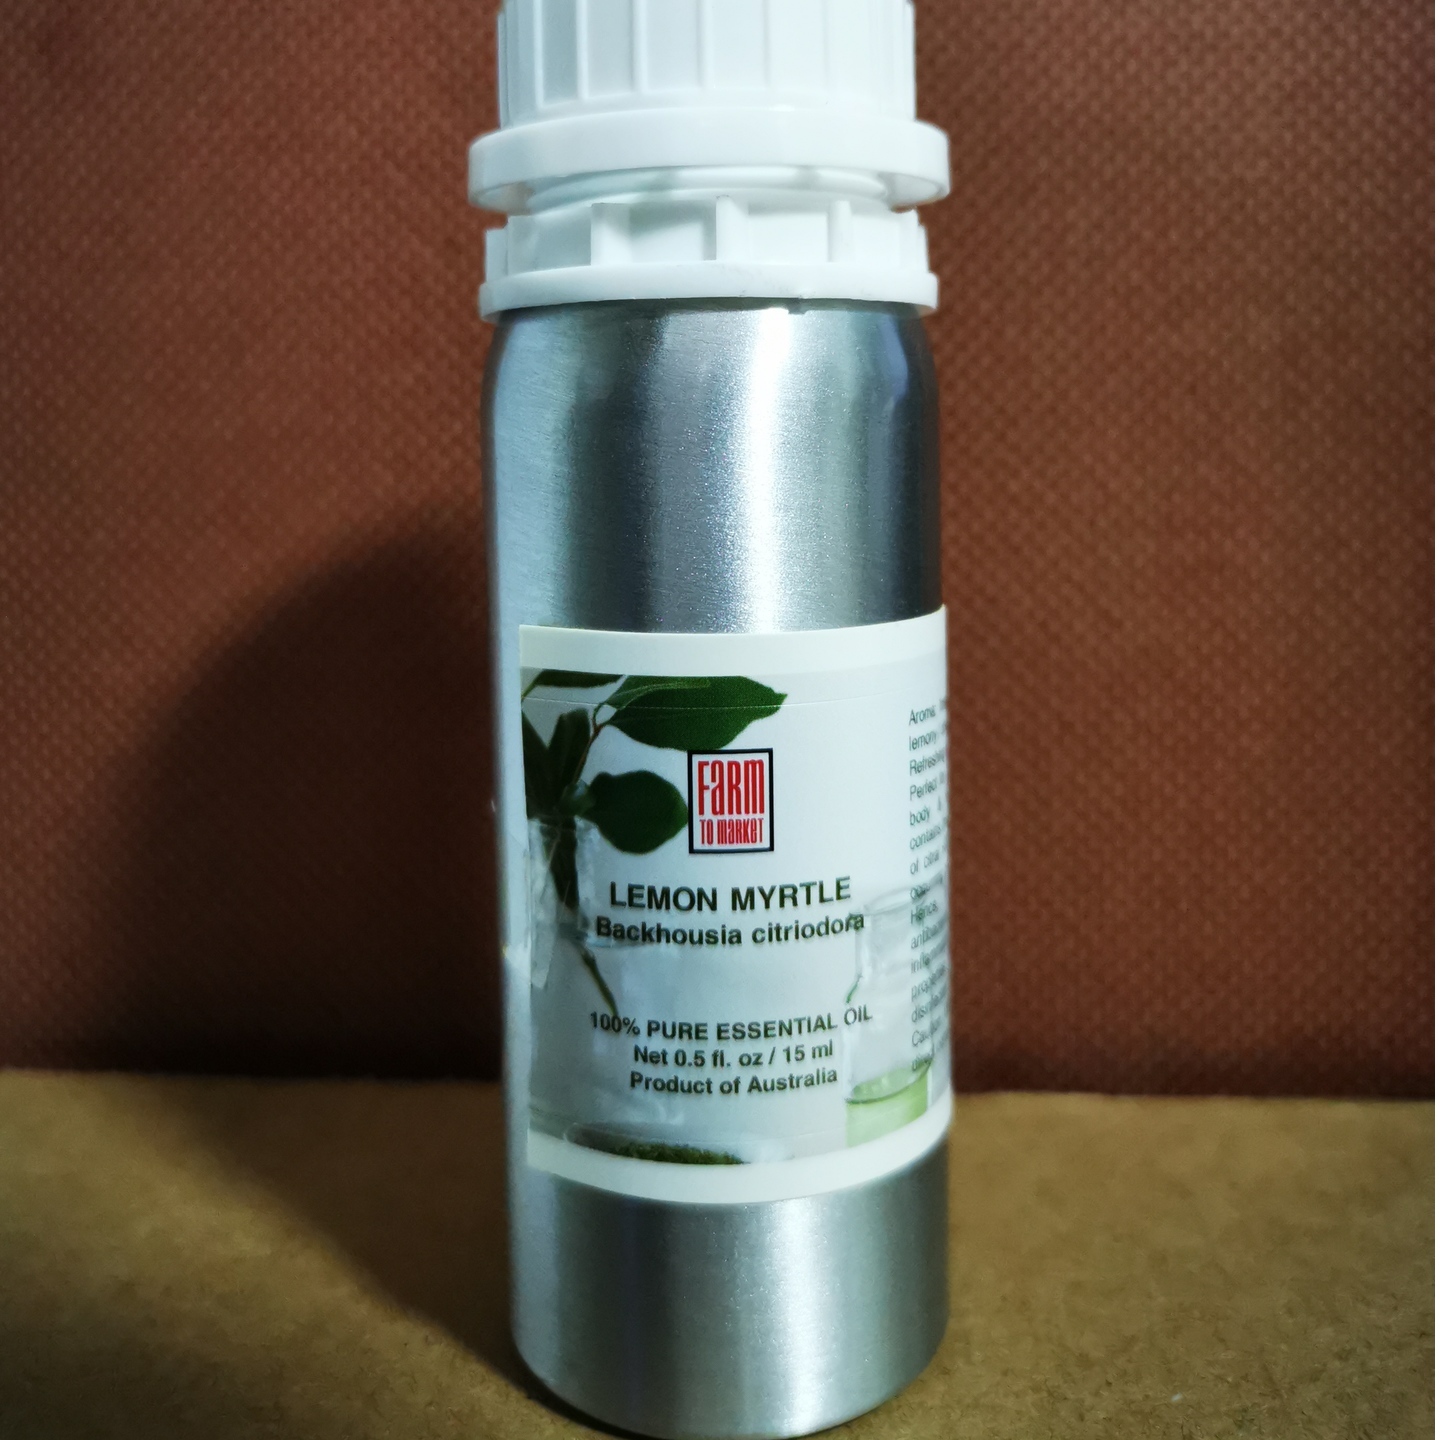 Australian Lemon Myrtle Essential Oil 100 Pure  100ml refill Tournaire Bottle  Backhousia citriodora